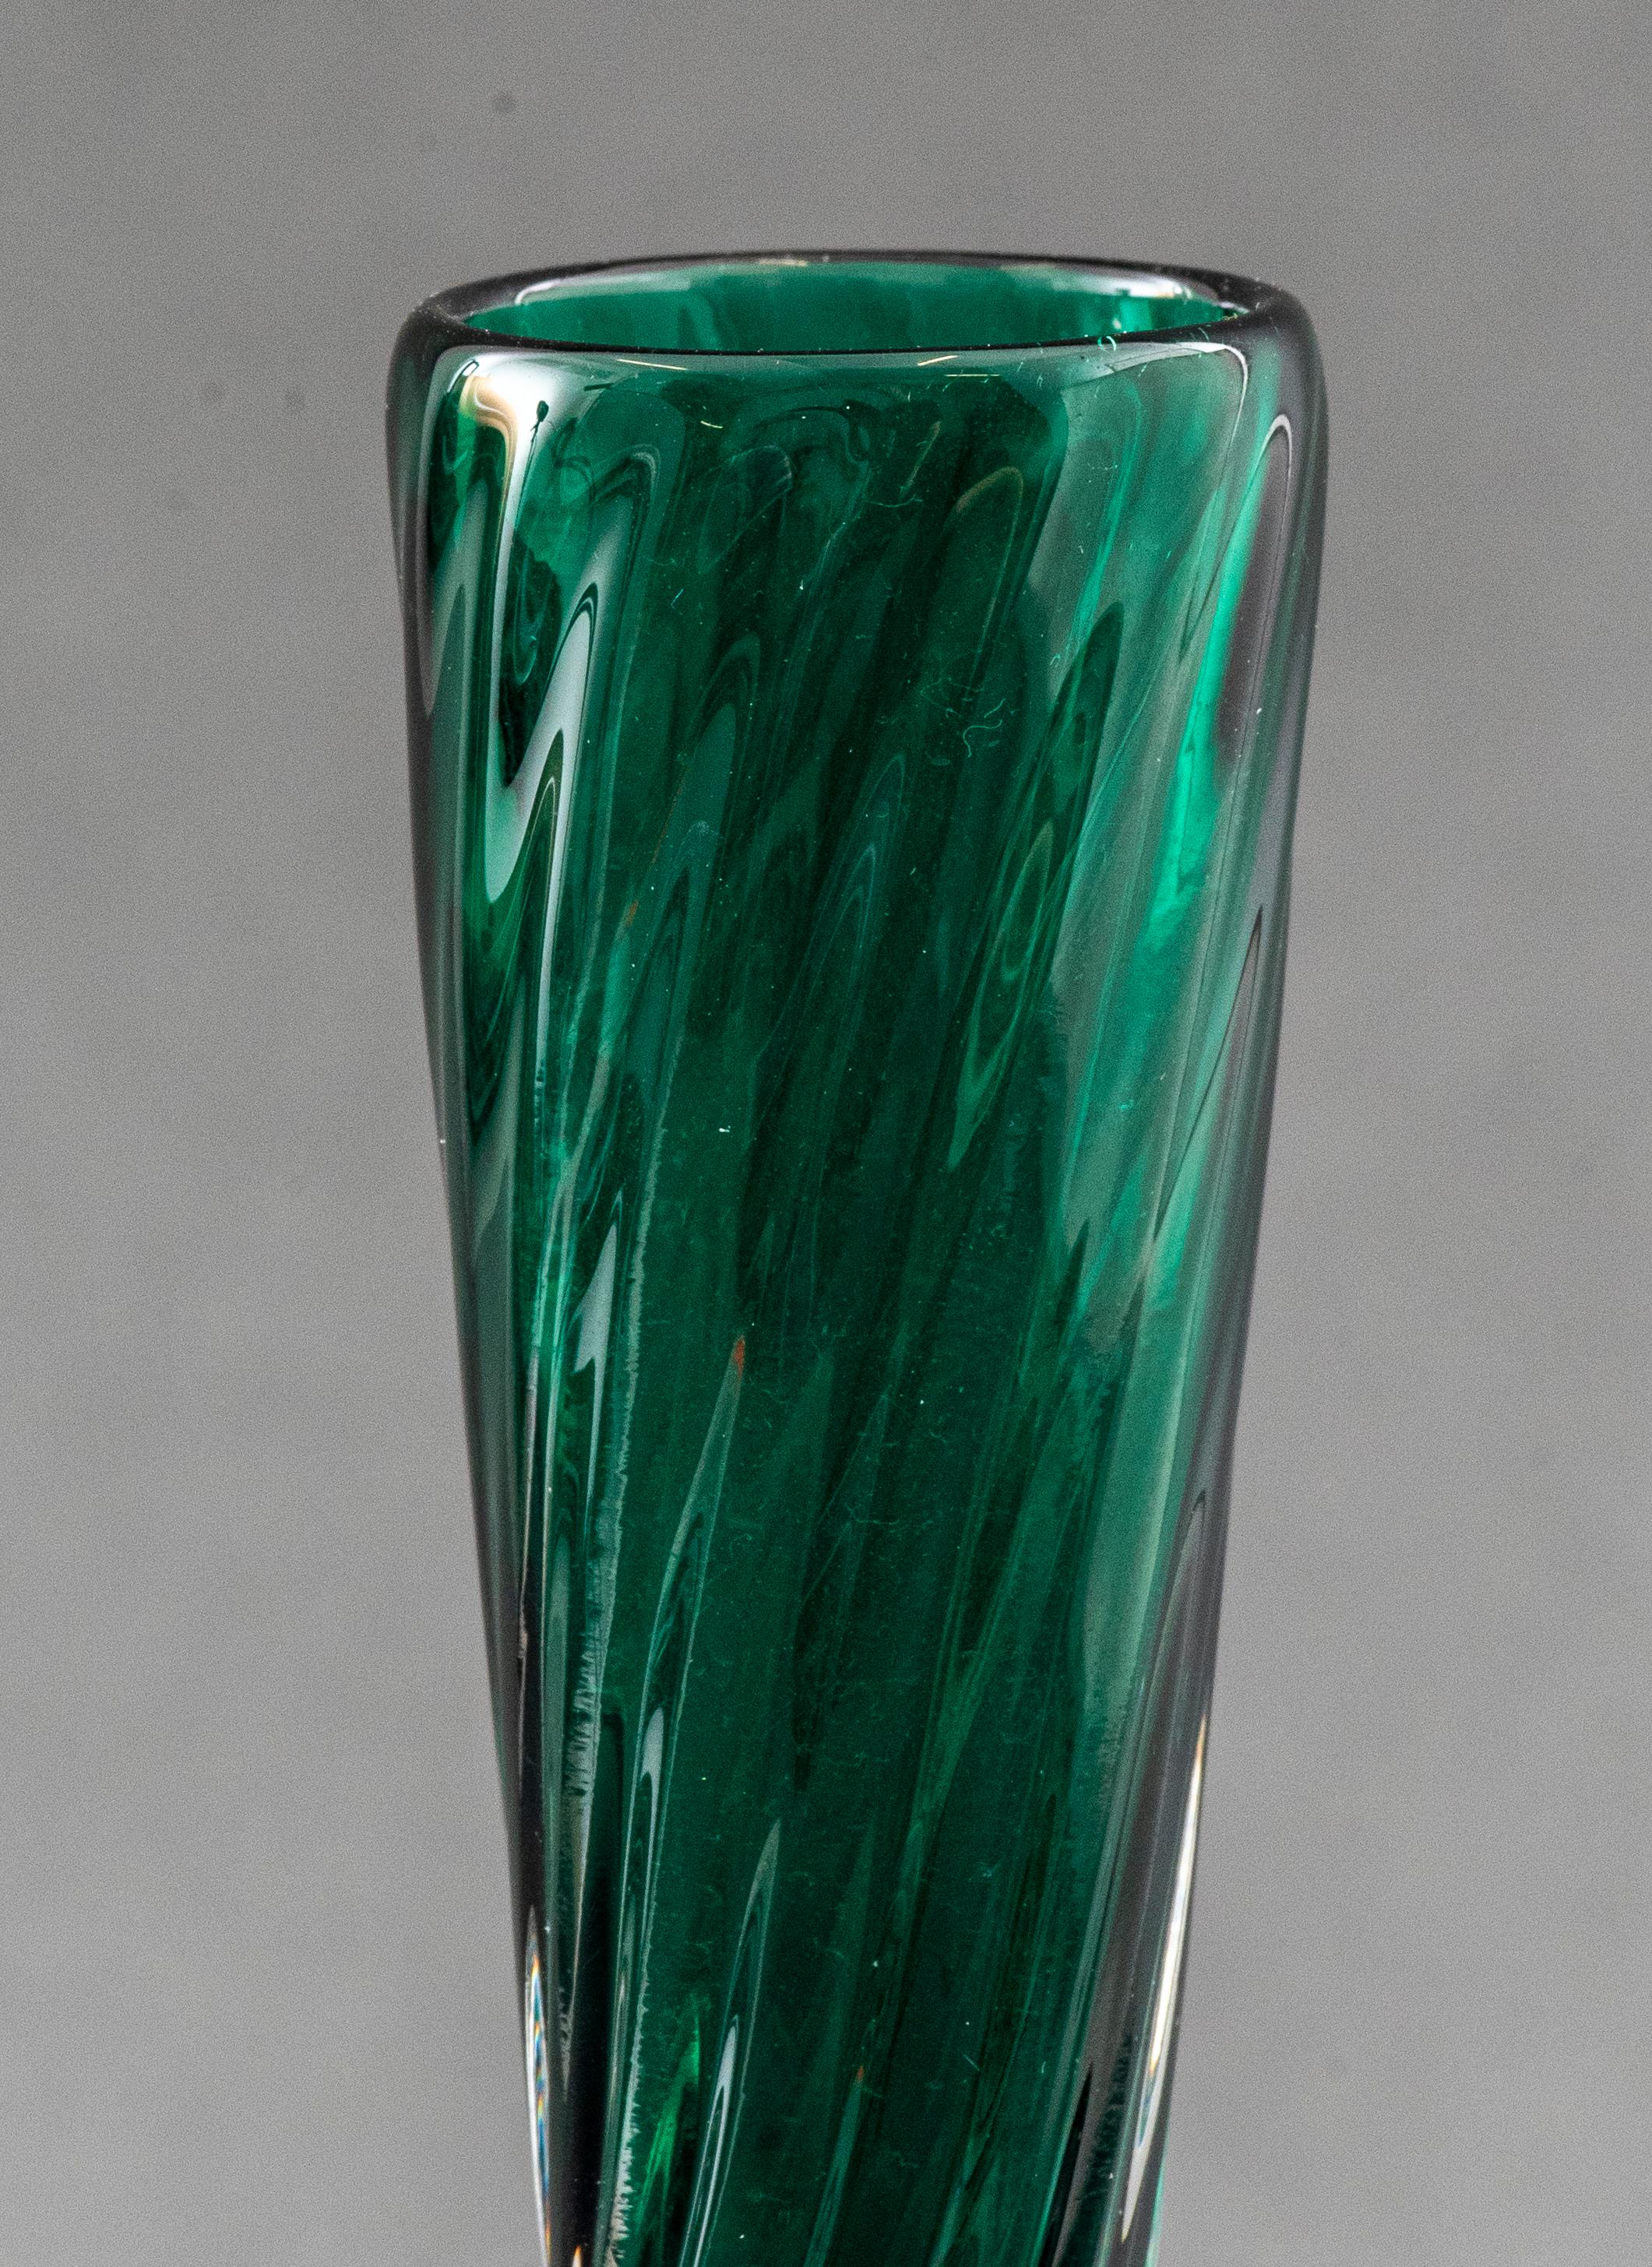 Modern rippled art glass vase, signed illegibly, dated 2018.

Measures: 10